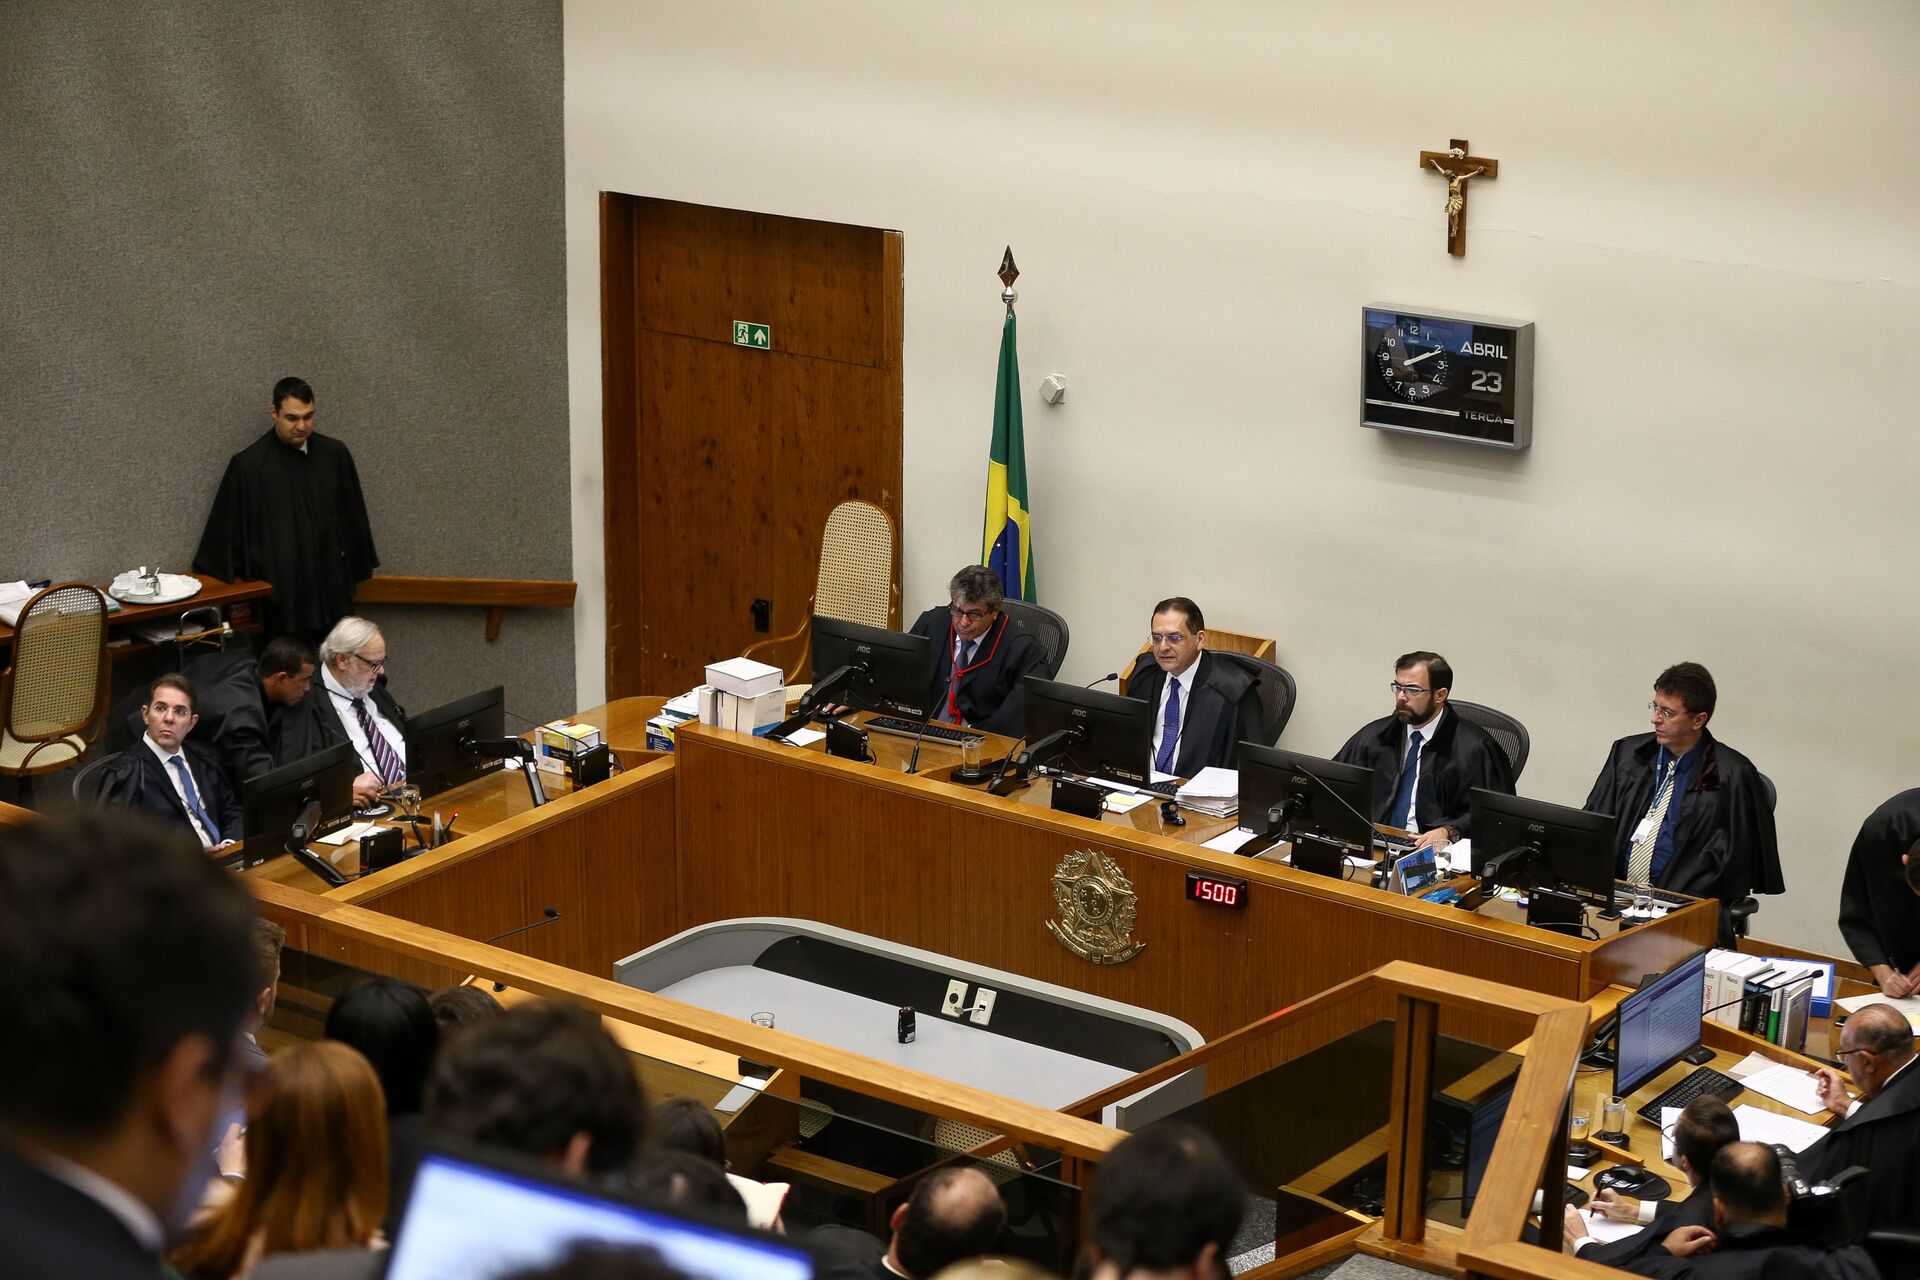 Ministro do STJ vai propor saída jurídica que beneficia Flávio Bolsonaro, diz jornal - Sputnik Brasil, 1920, 23.02.2021